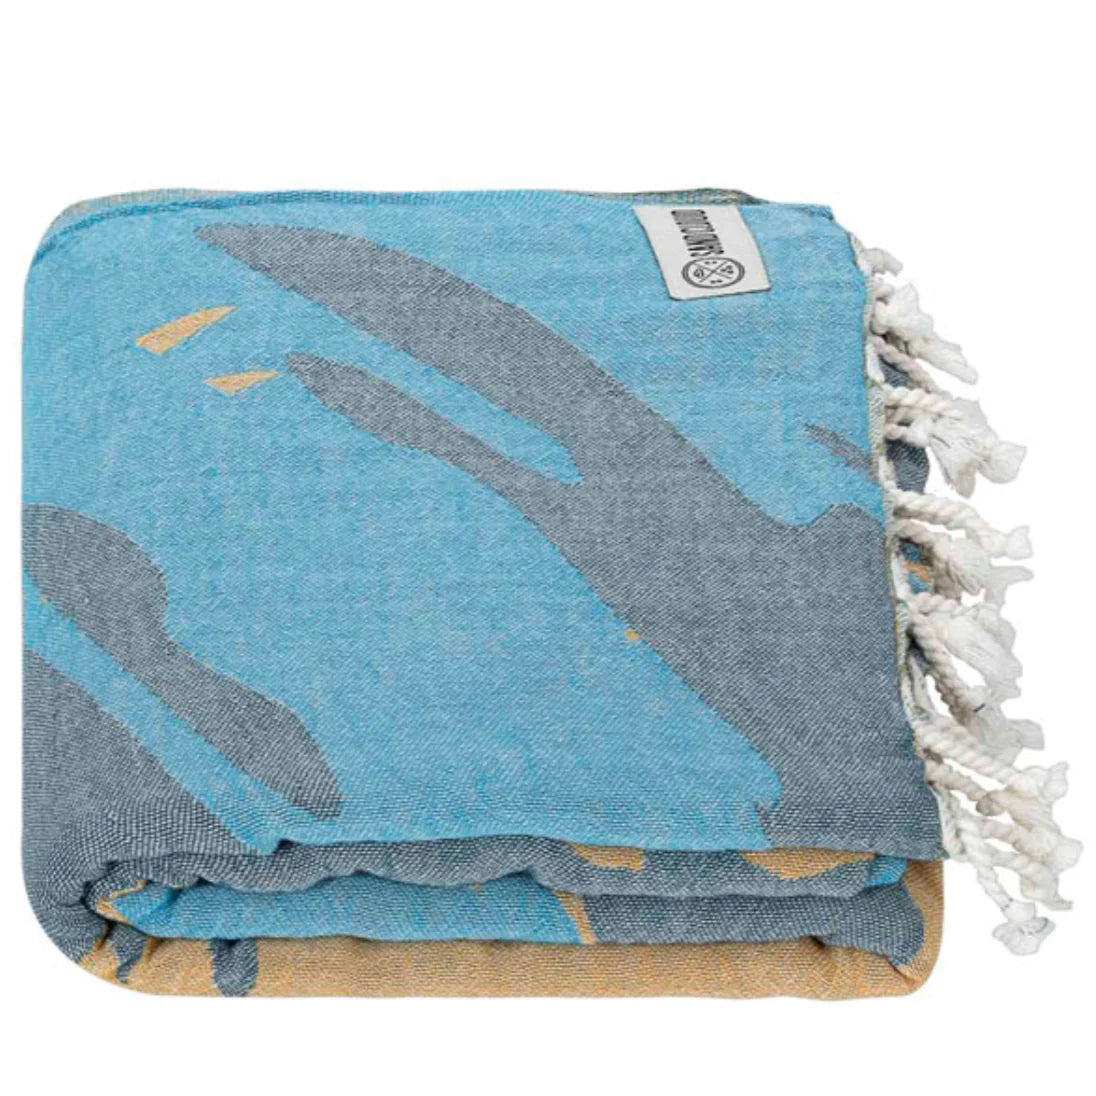 Sand Cloud Triton Beach Towel- Large  Style # WSF22TOW025BLUGL